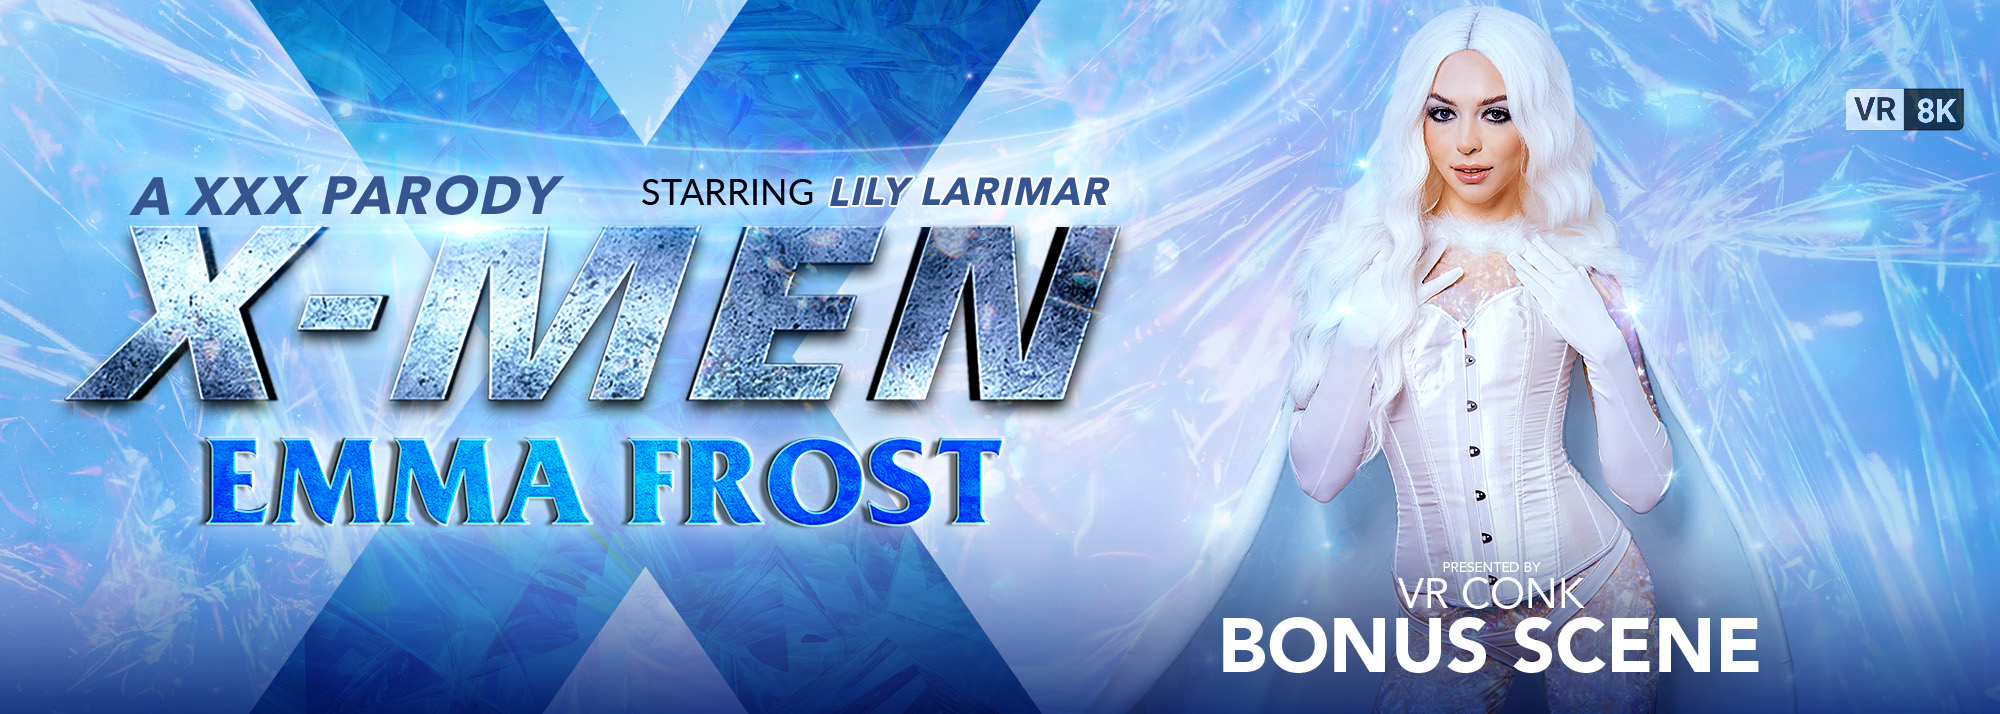 X-Men: Emma Frost (A XXX Parody) - VR Porn Video, Starring: Lily Larimar